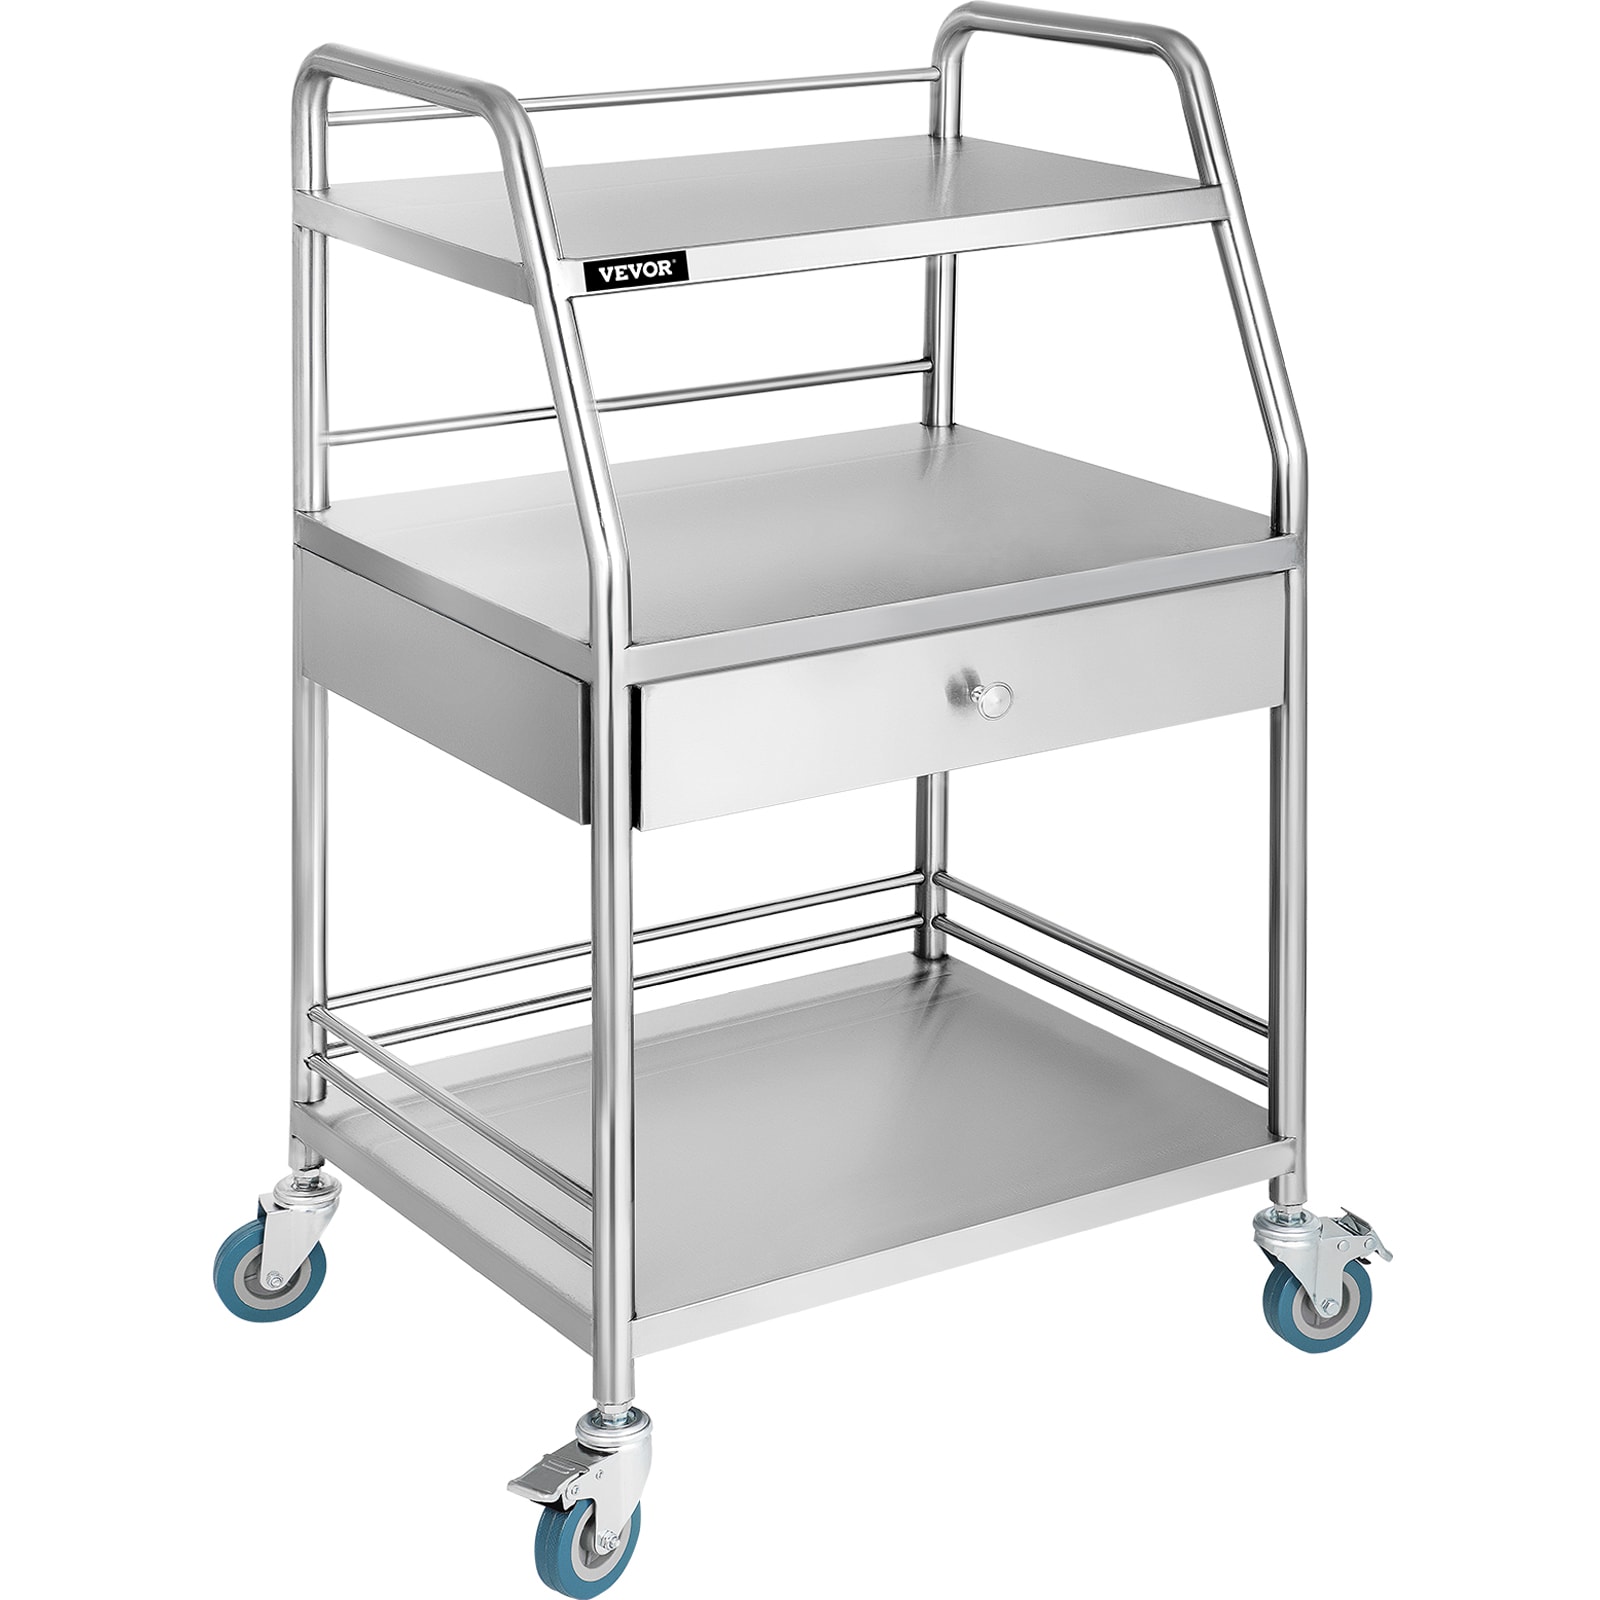 39-in 1-Drawer Shelf Utility Cart Stainless Steel | - VEVOR SYSSTC-3FD1CT0001V0